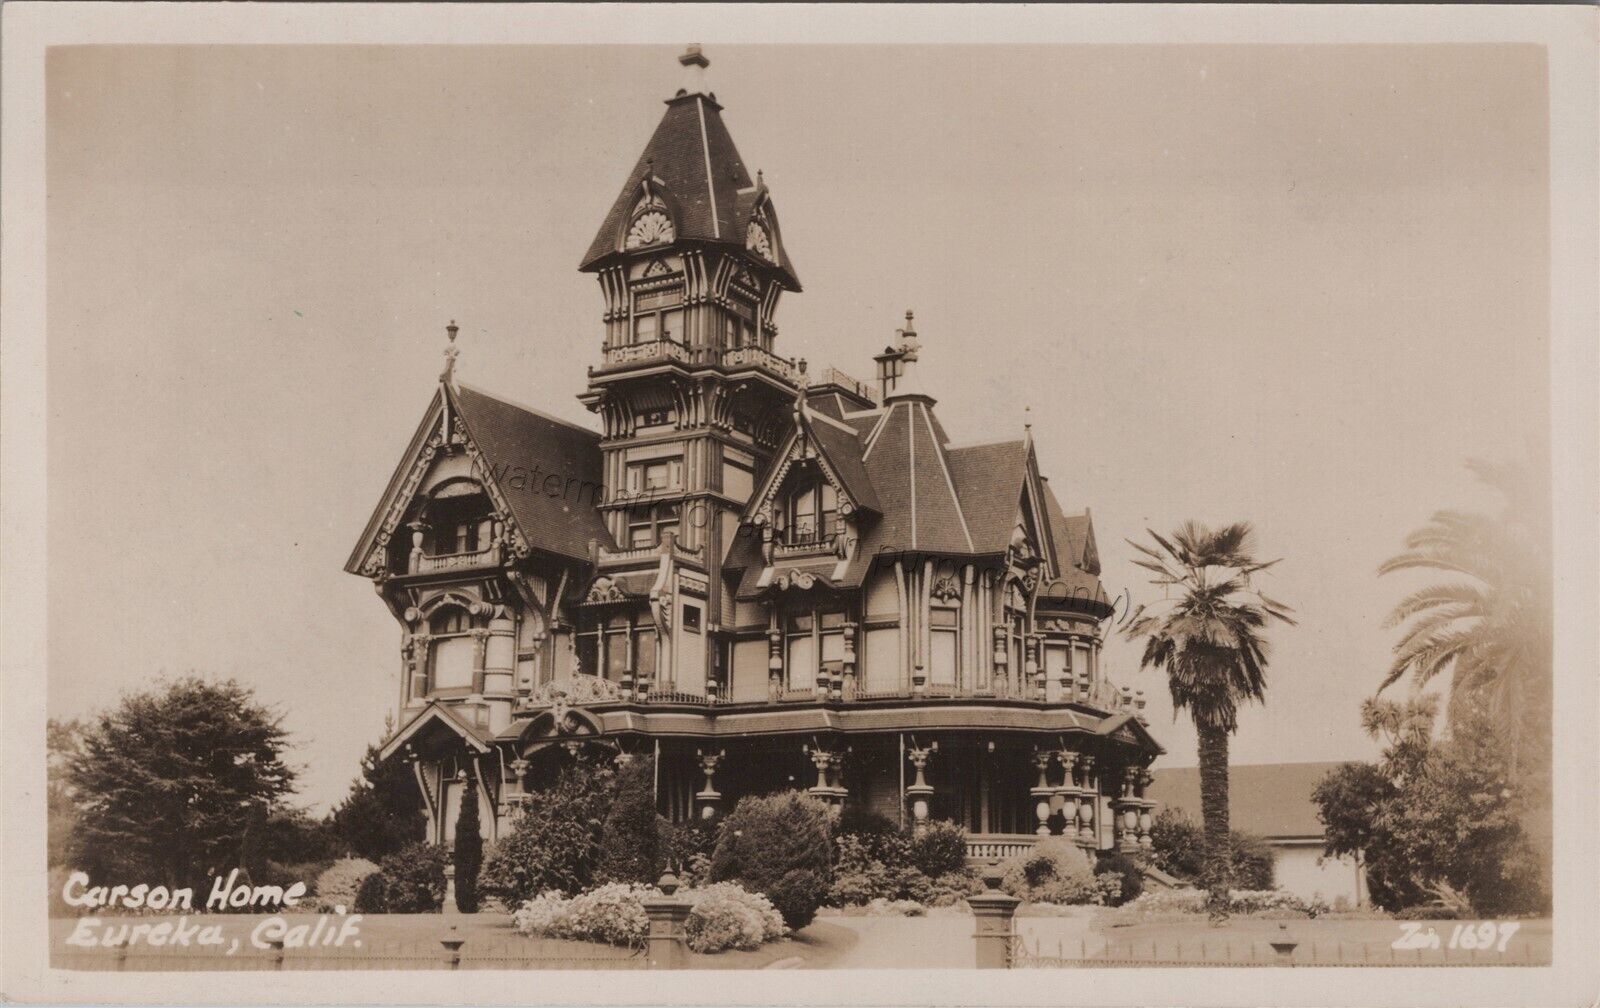 Eureka, CA: RPPC Carson Home, vintage California Zan Real Photo Postcard